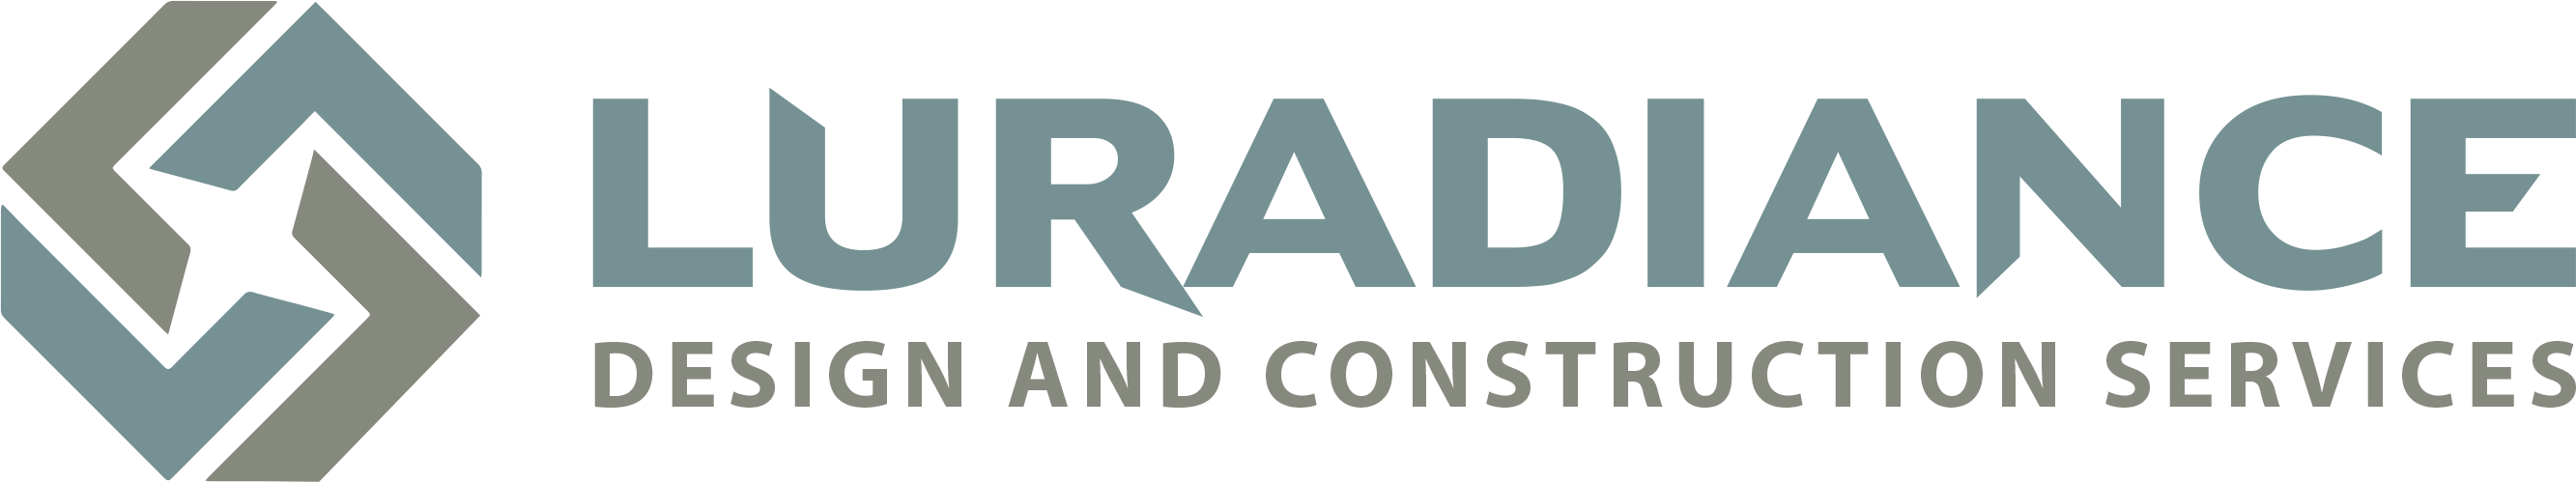 Luradiance Design Logo